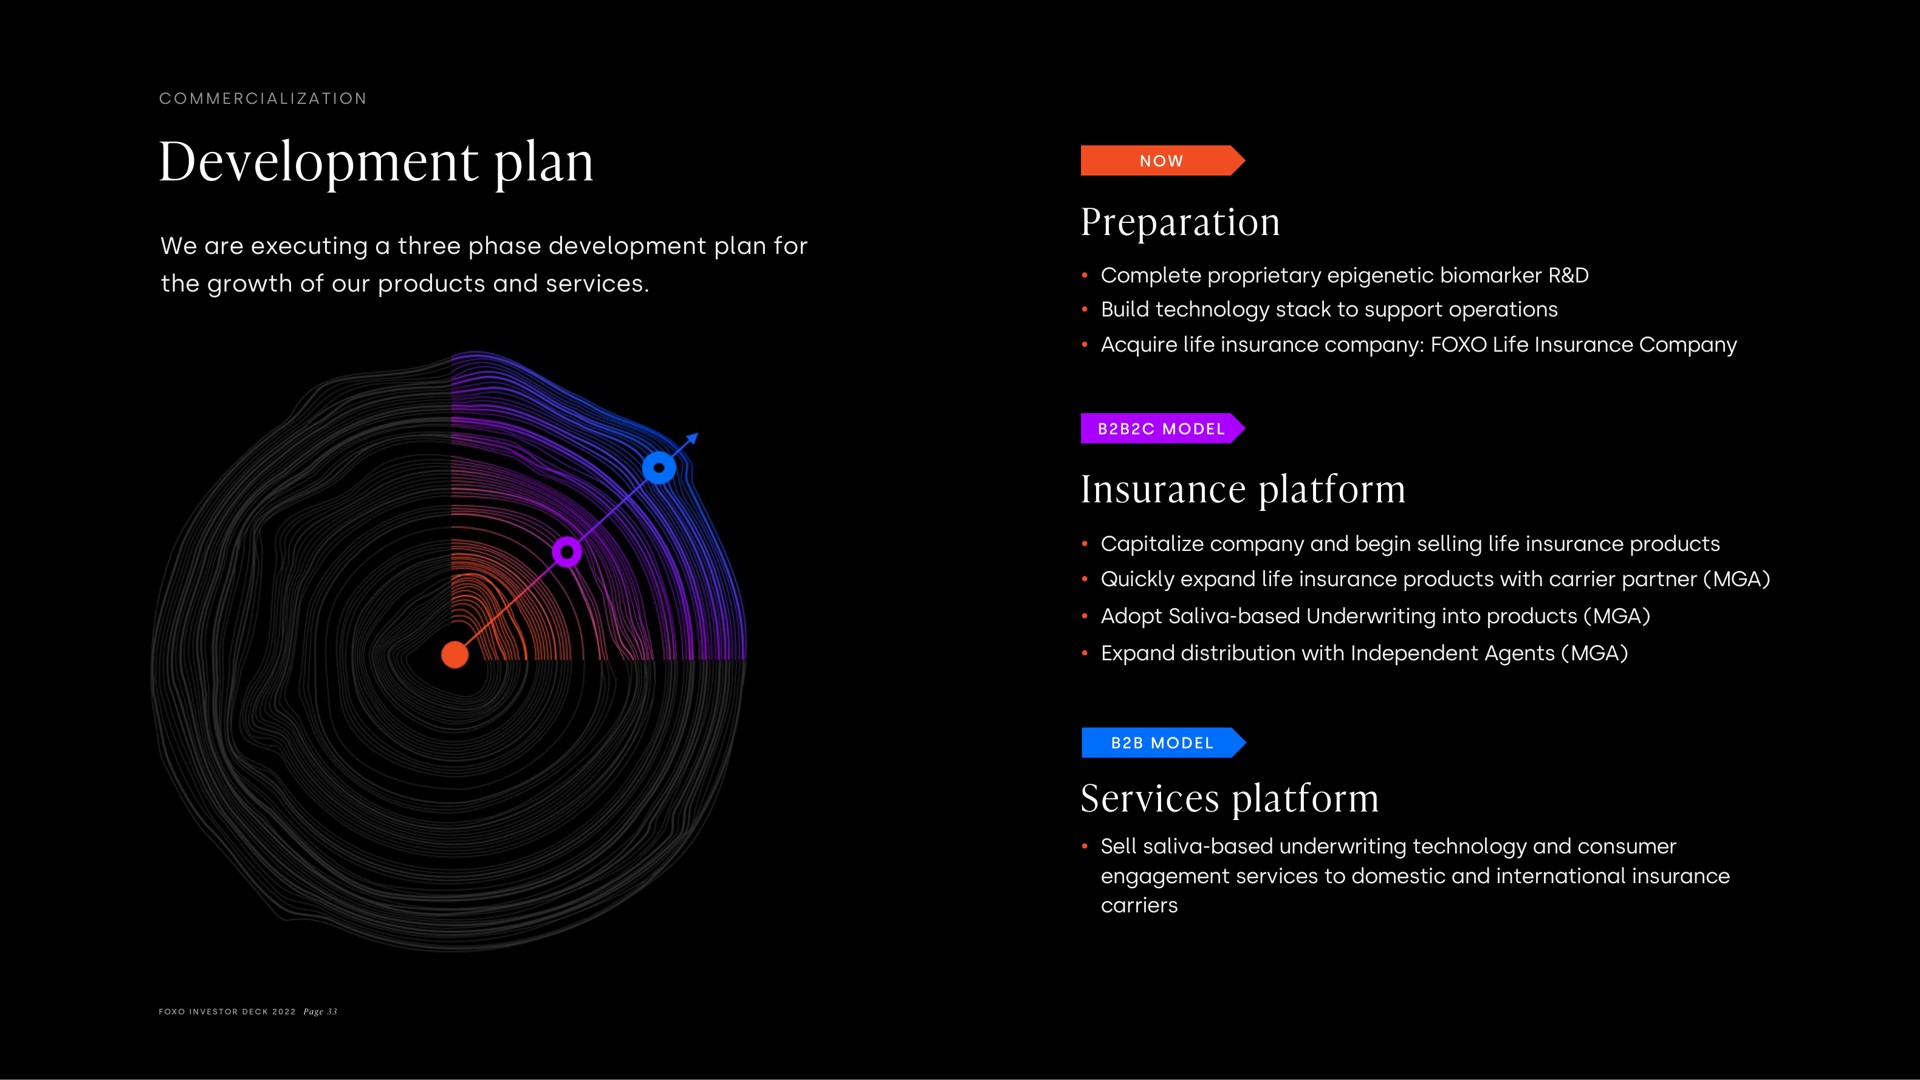 development plan preparation insurance platform services platform brave now | Foxo